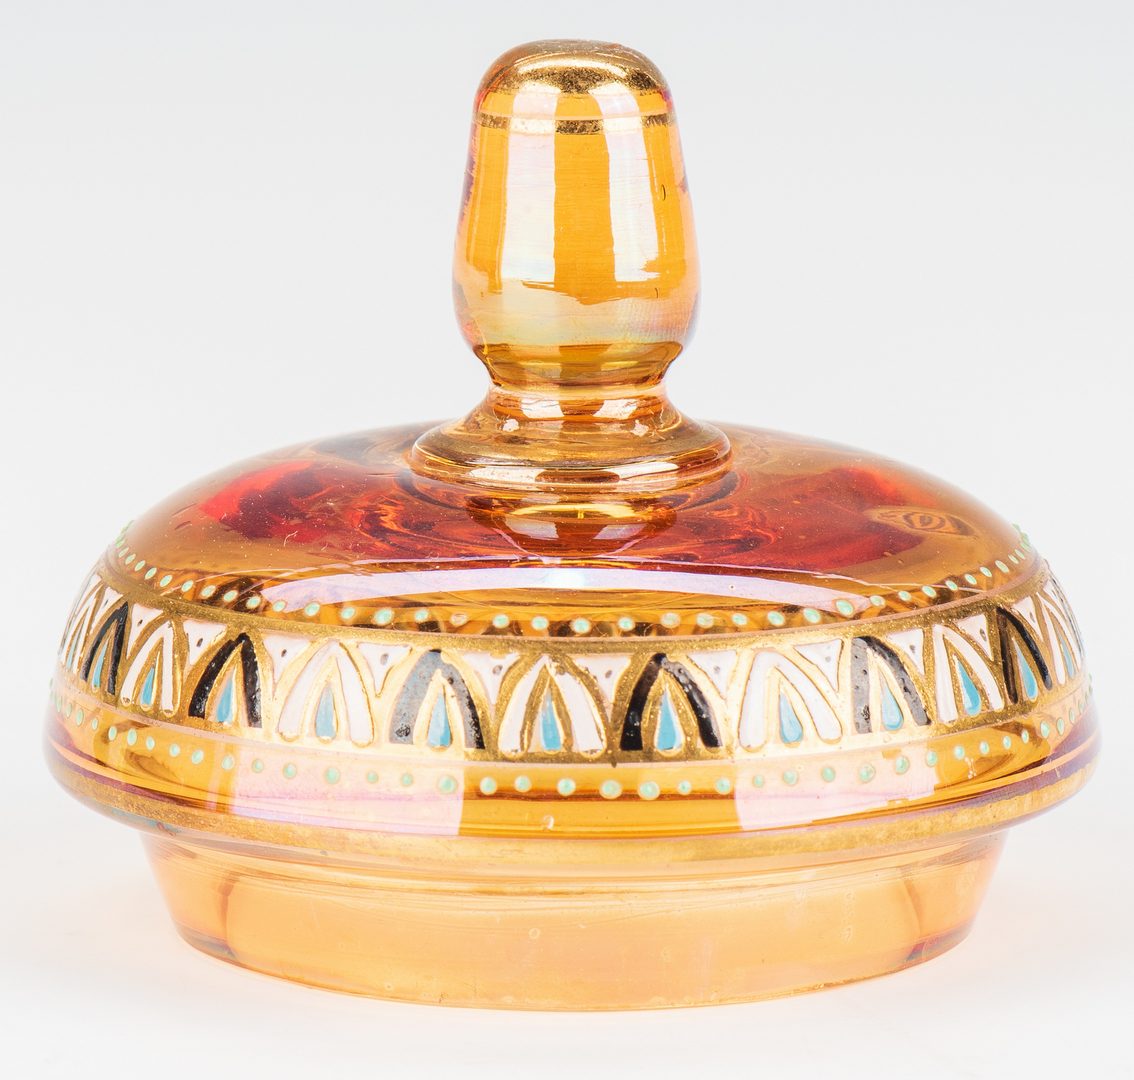 Lot 226: 4 Enameled amber glass Kovschs and pot